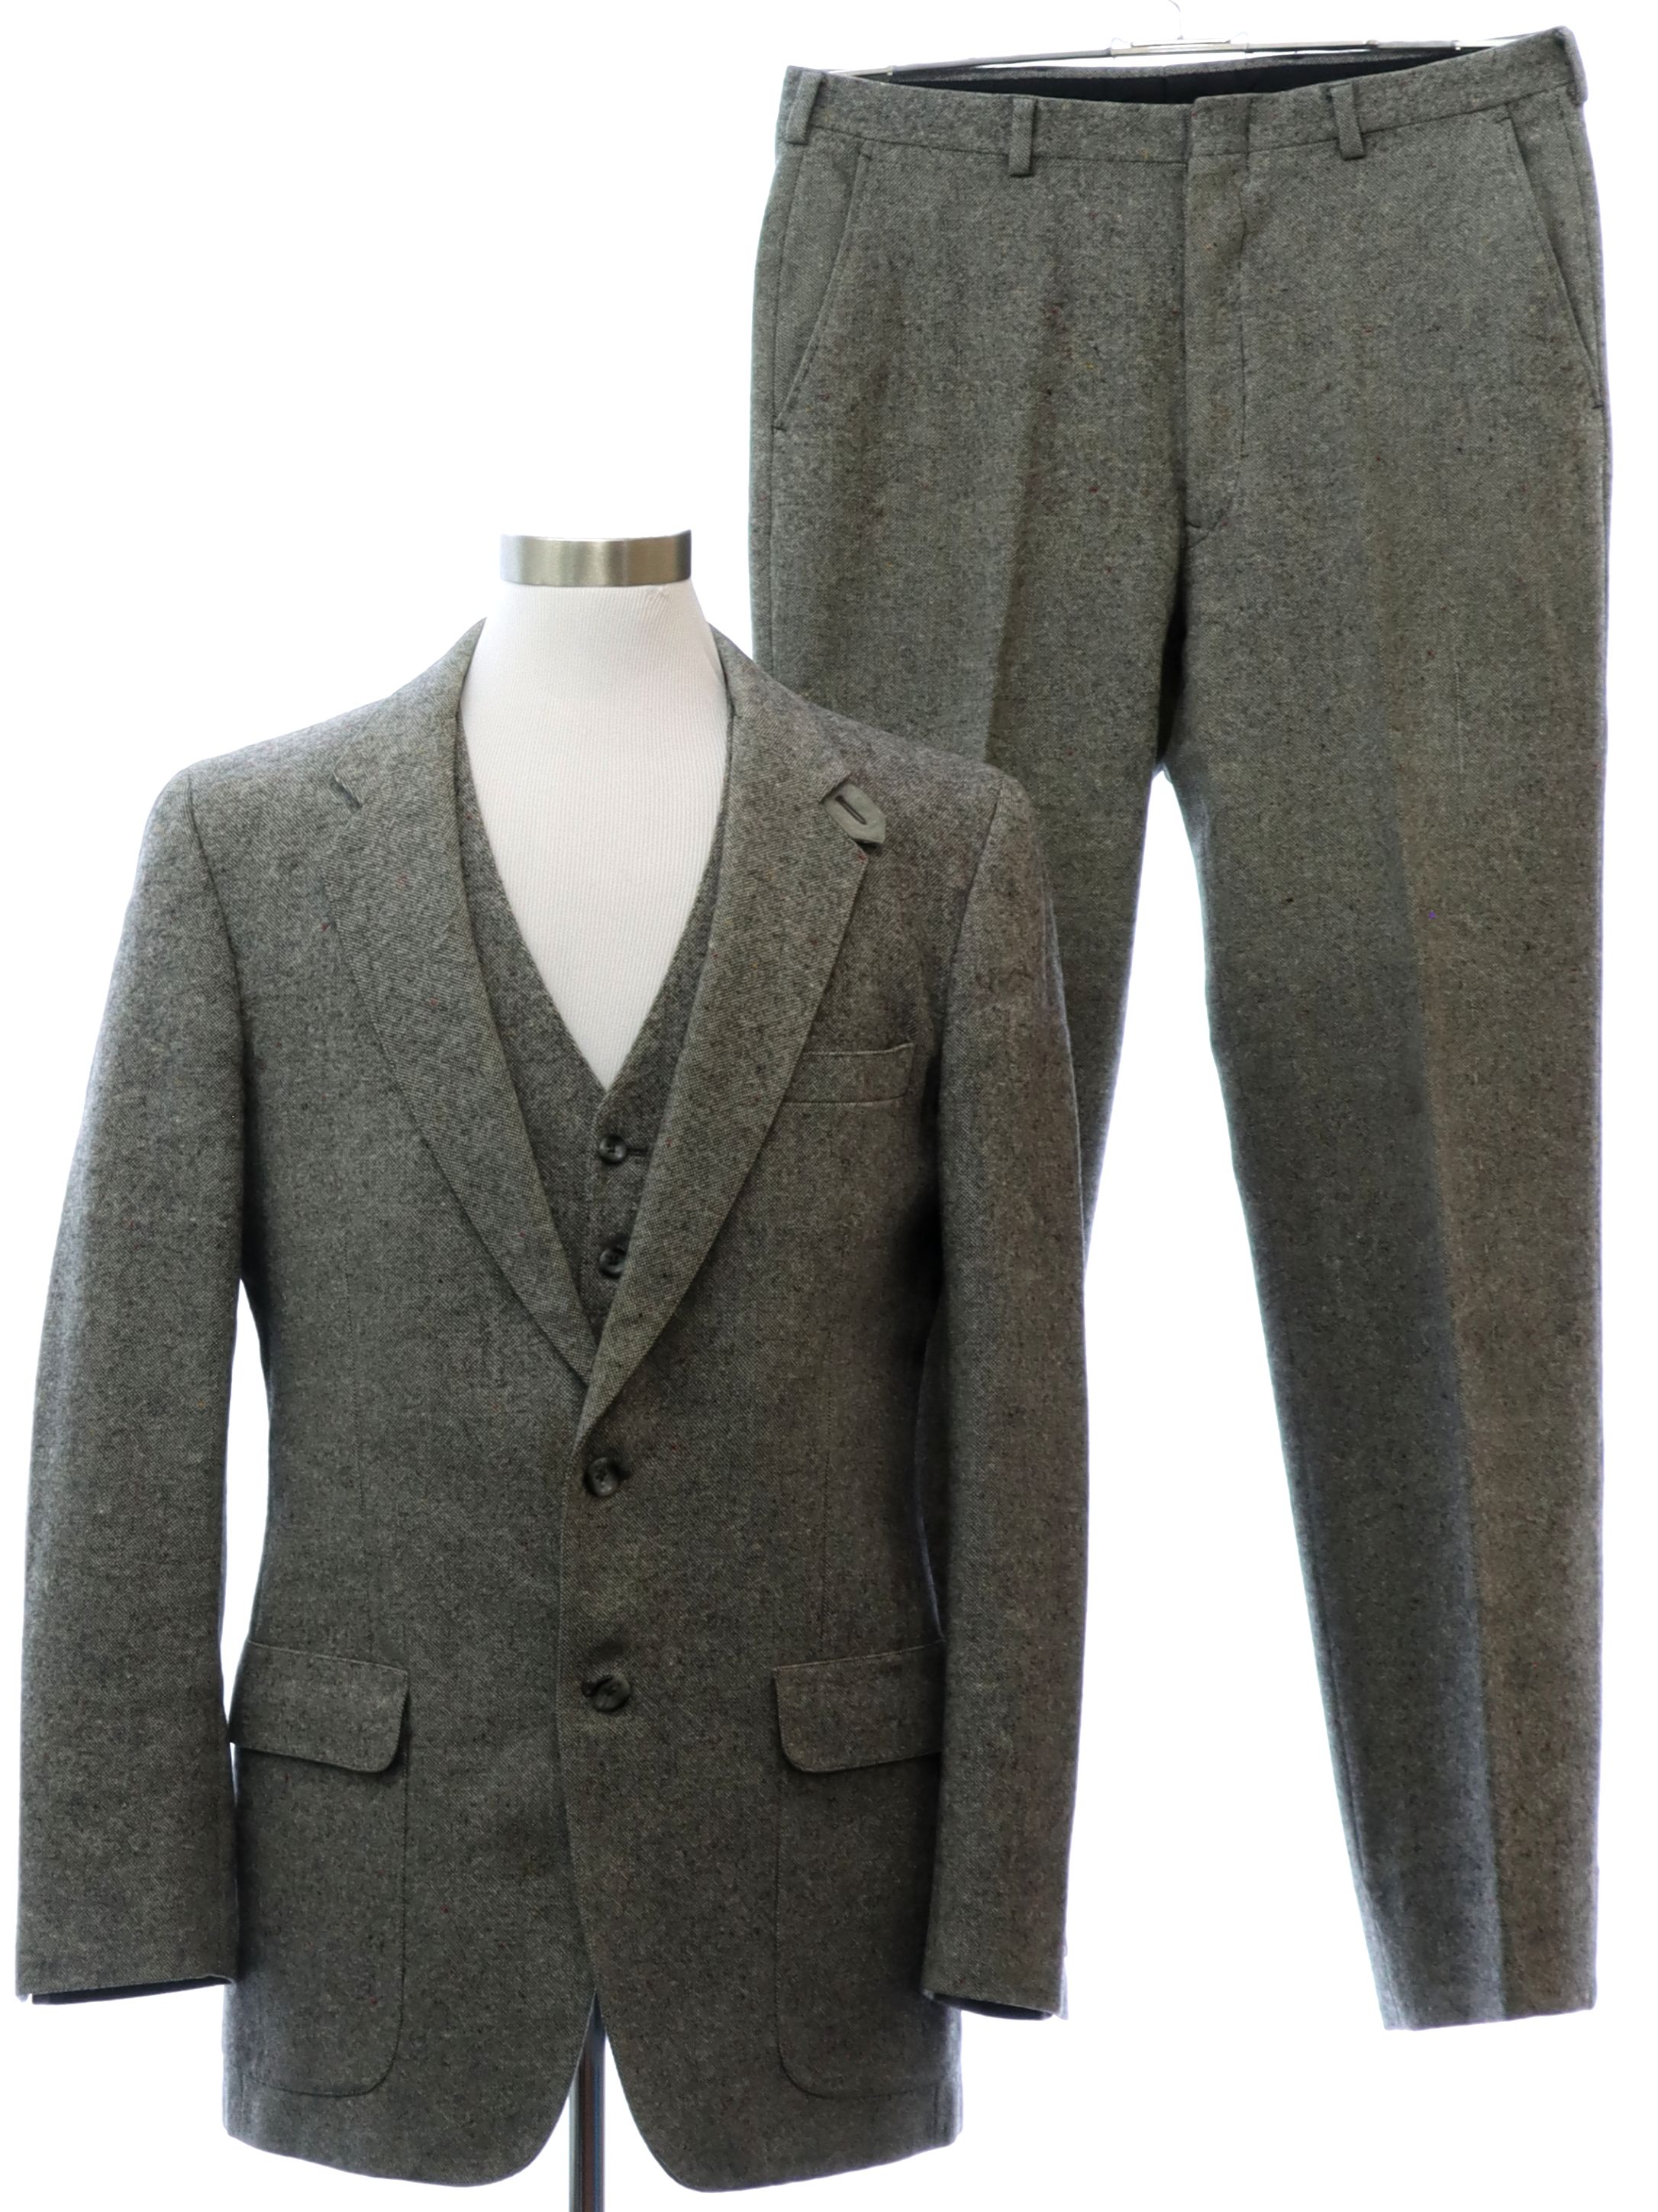 Retro 1980's Suit (Claridge Collection for Nordstrom) : 80s